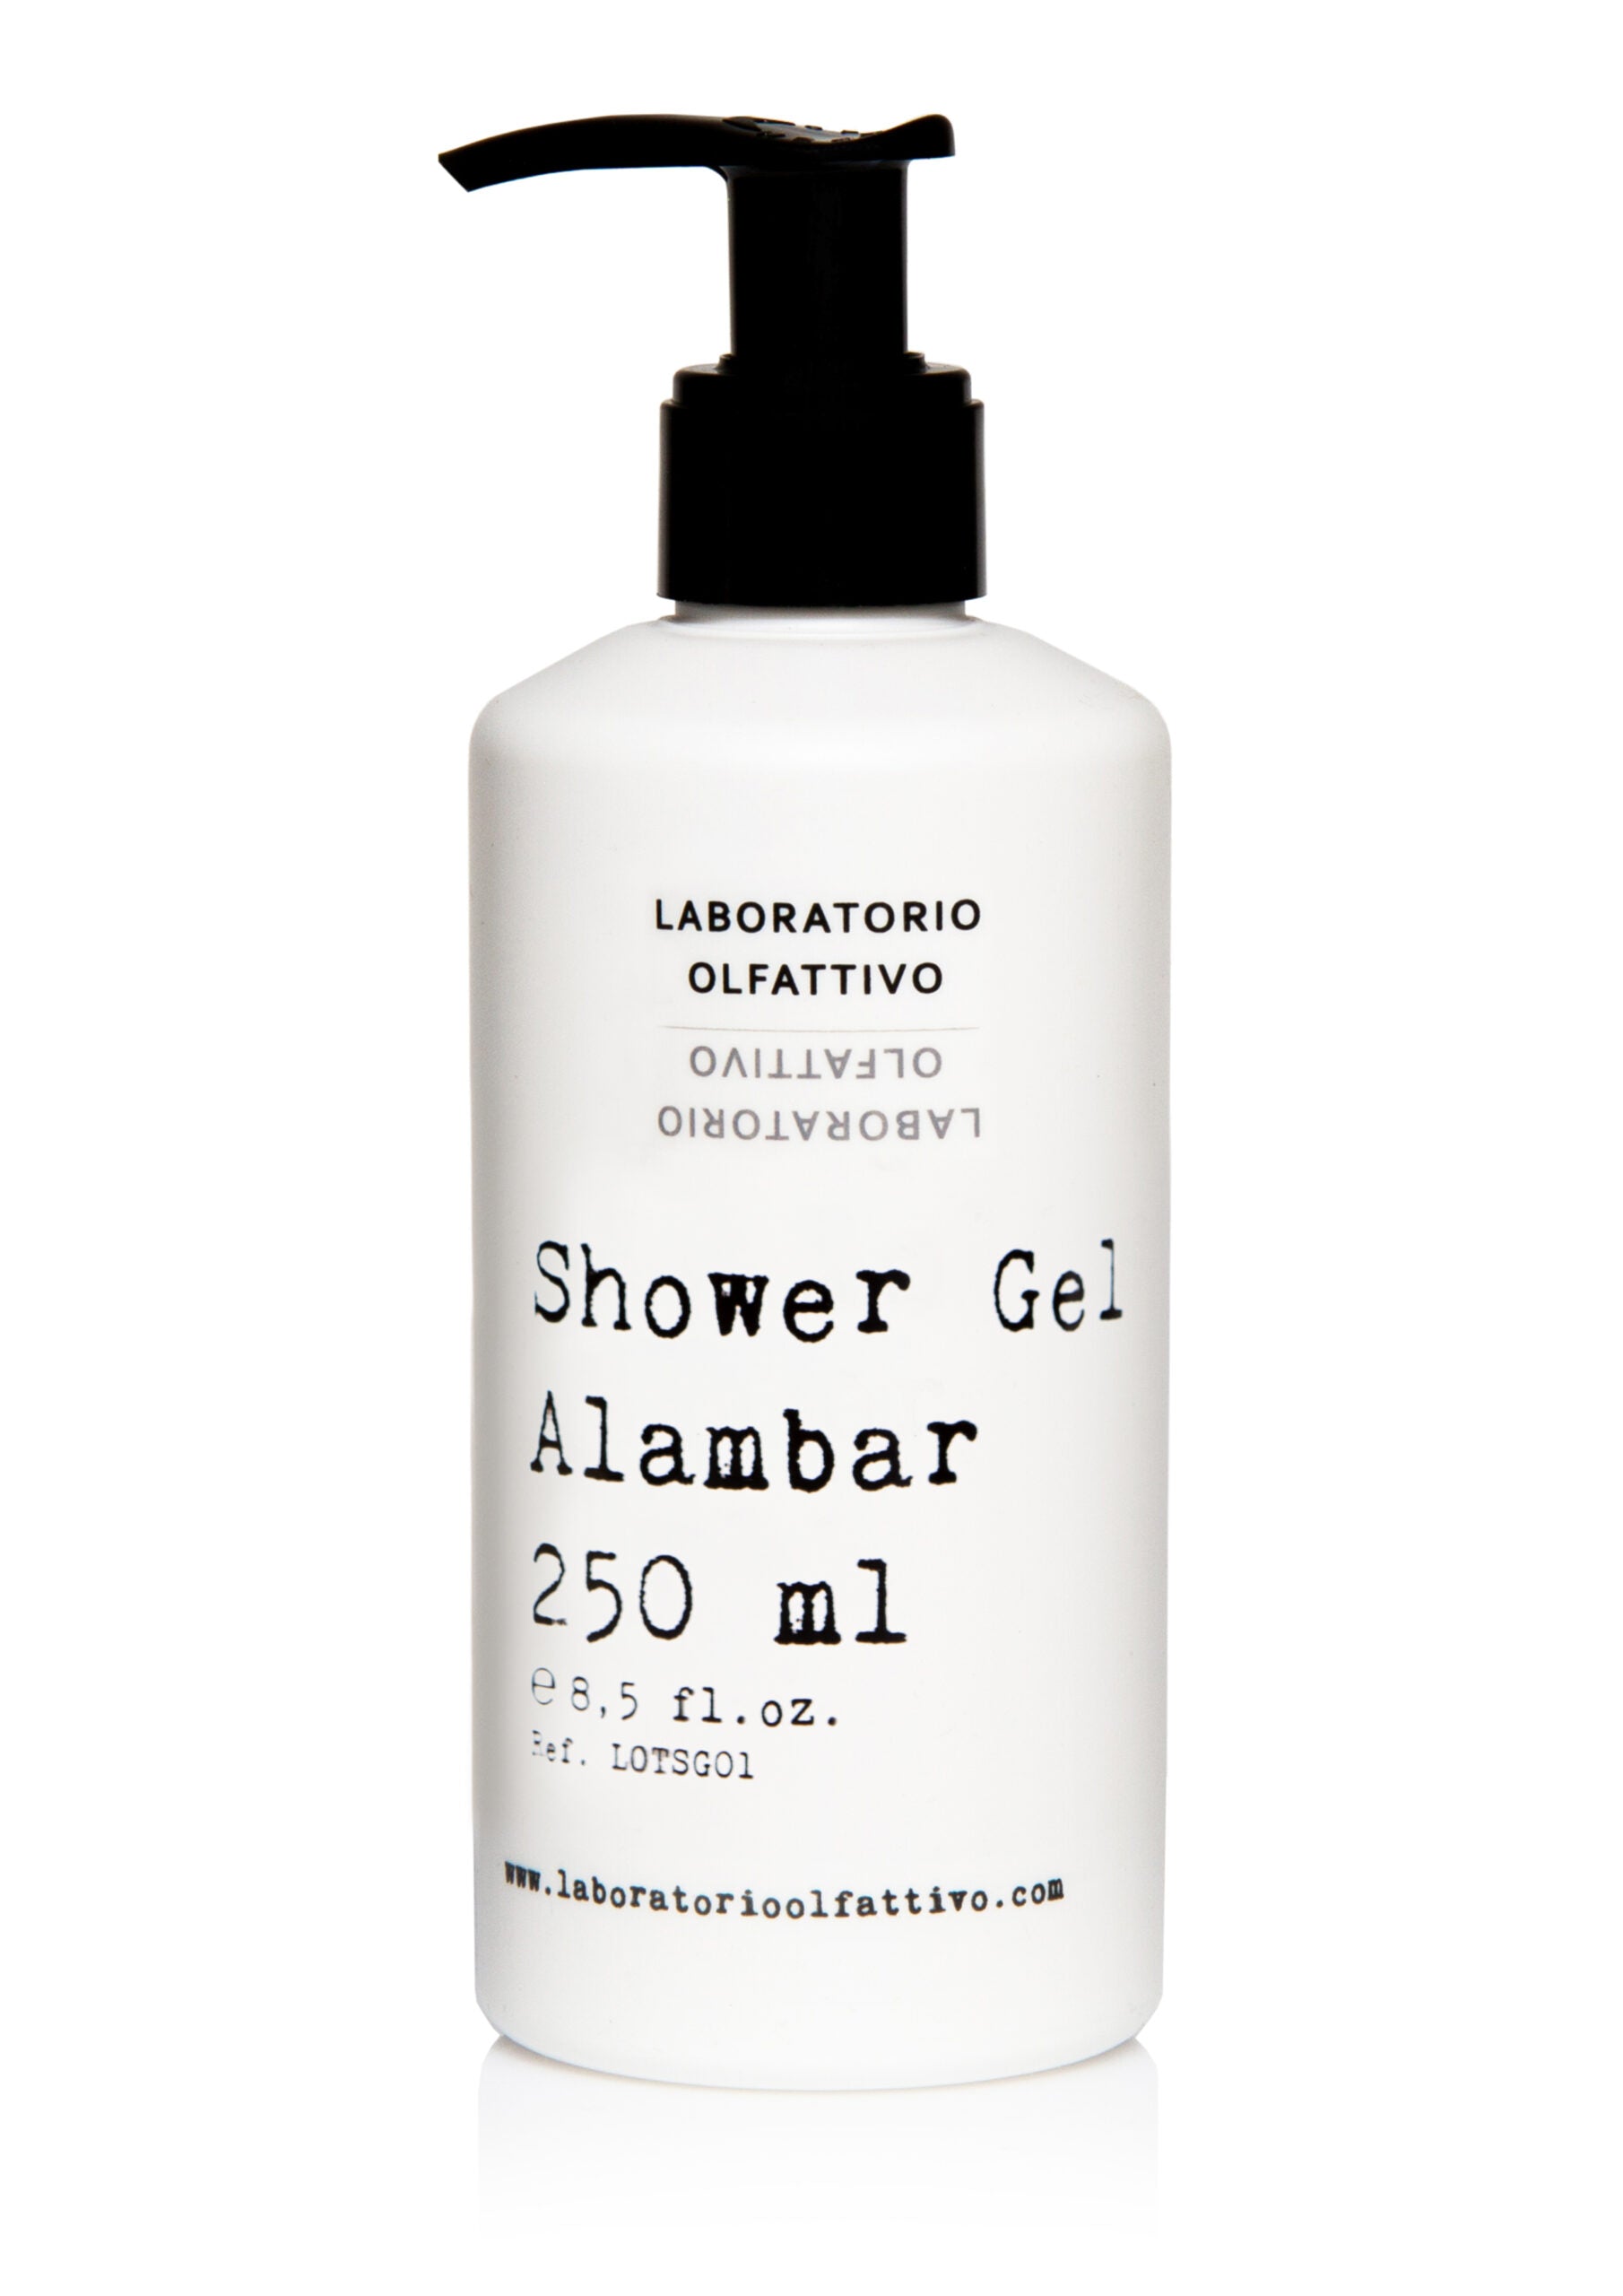 Laboratorio Olfattivo Alambar Shower Gel